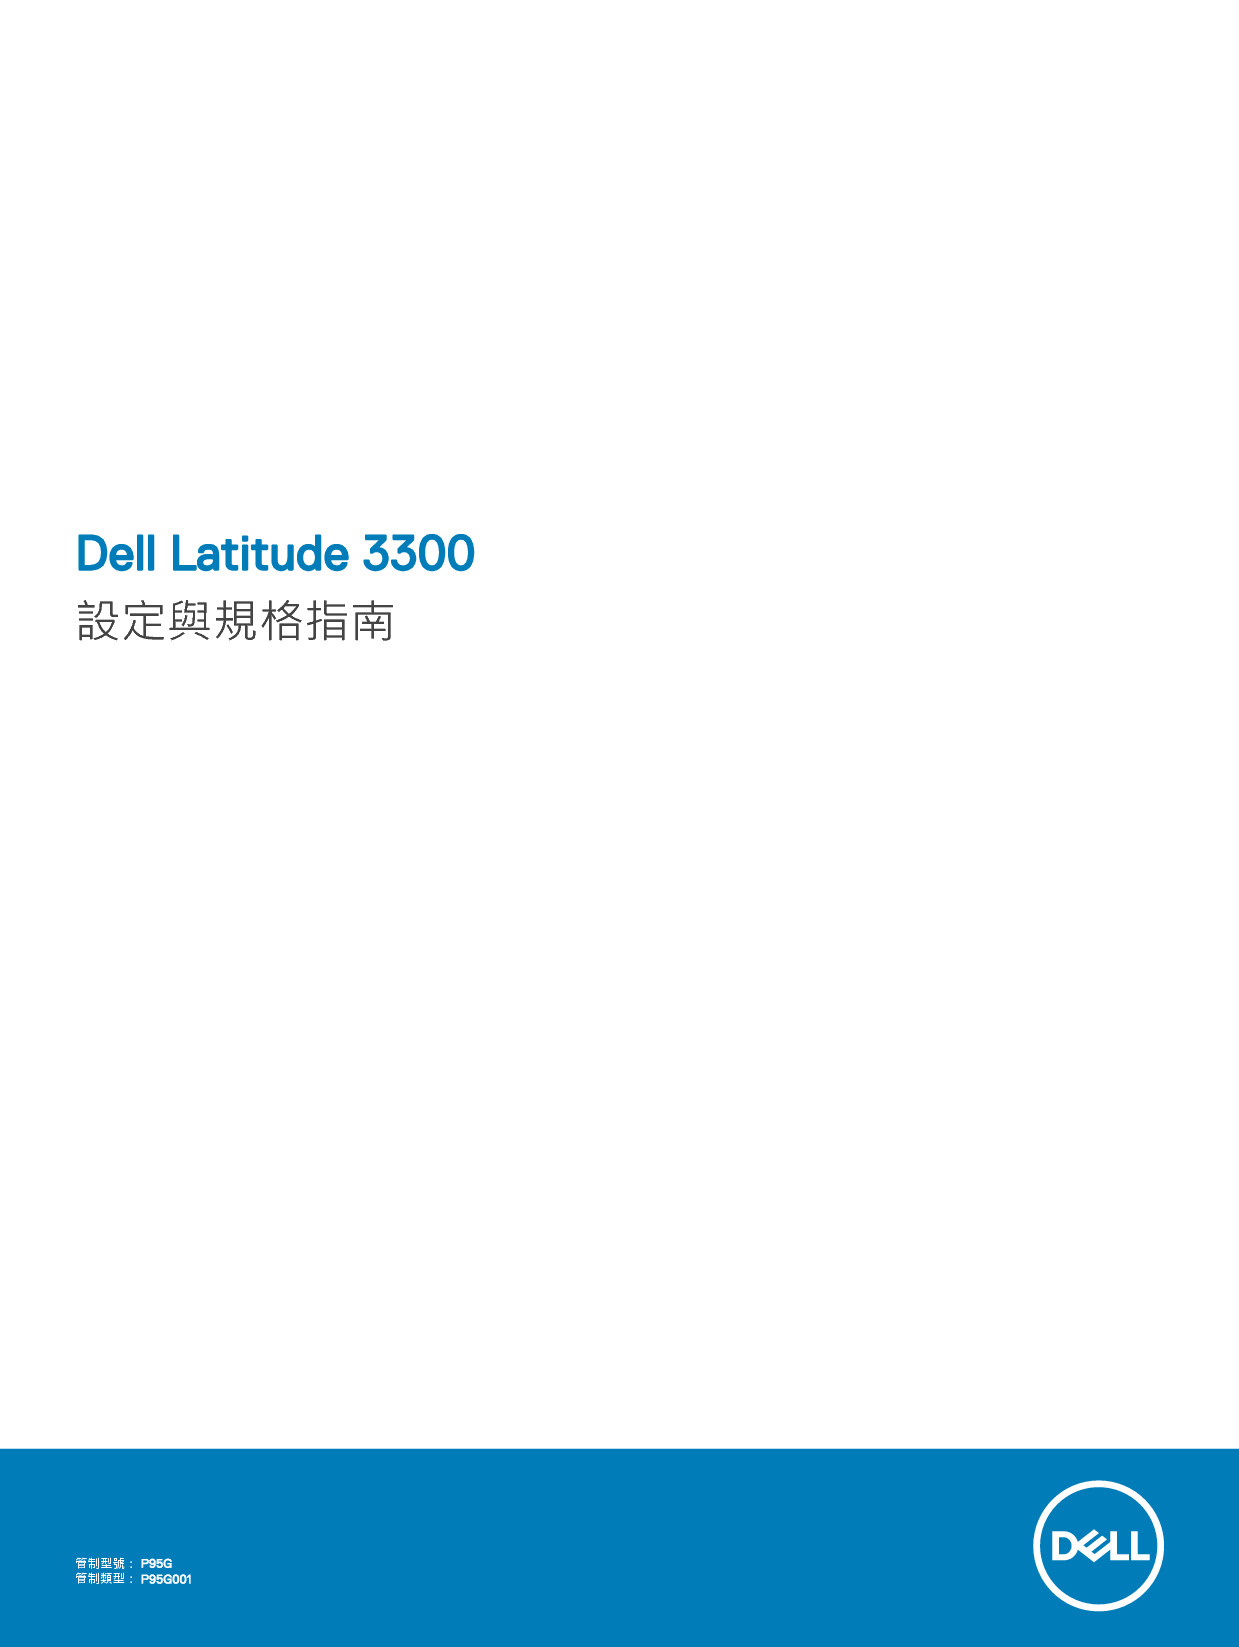 戴尔 Dell Latitude 3300 繁体 用户手册 封面